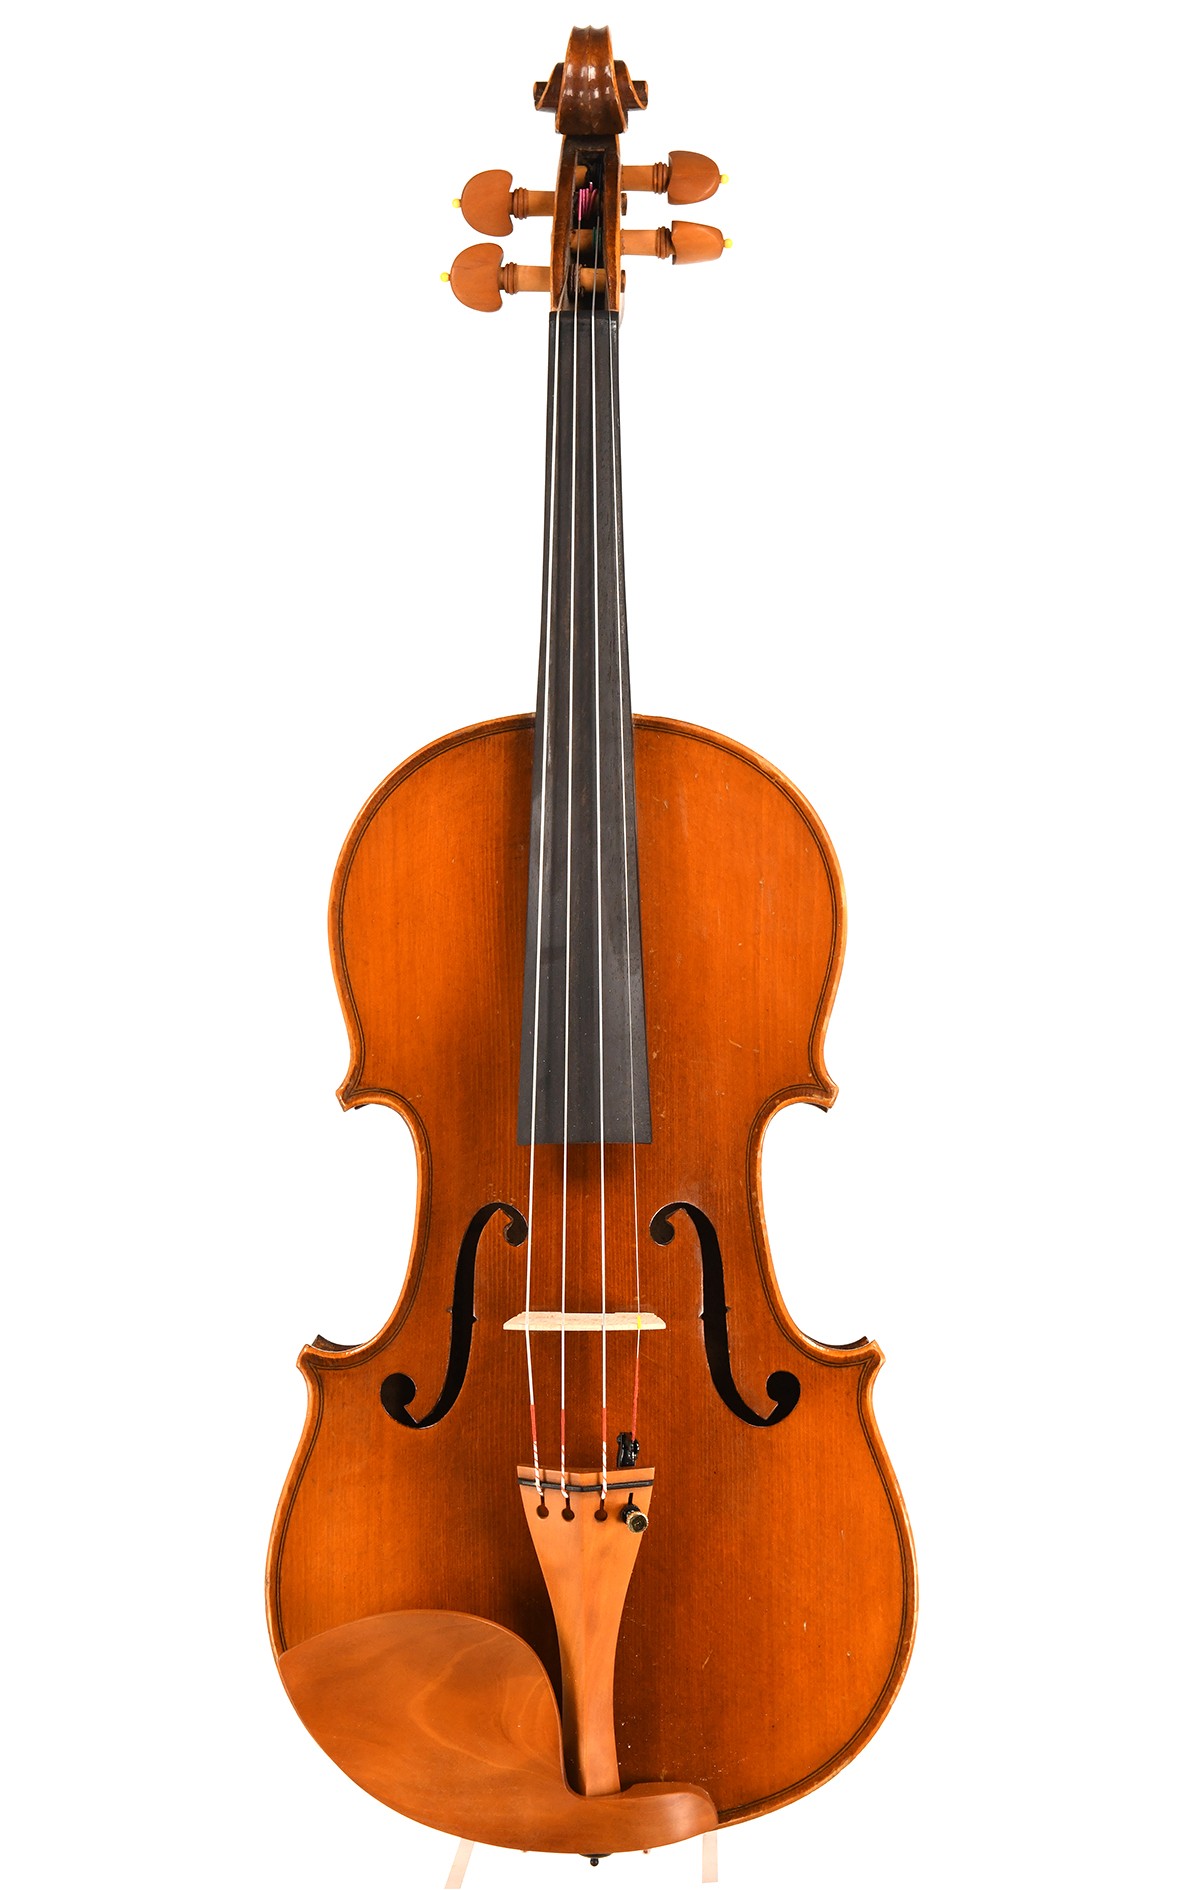 Old French violin. J.T.L. Mirecourt "Dulcis et Fortis" c.1880